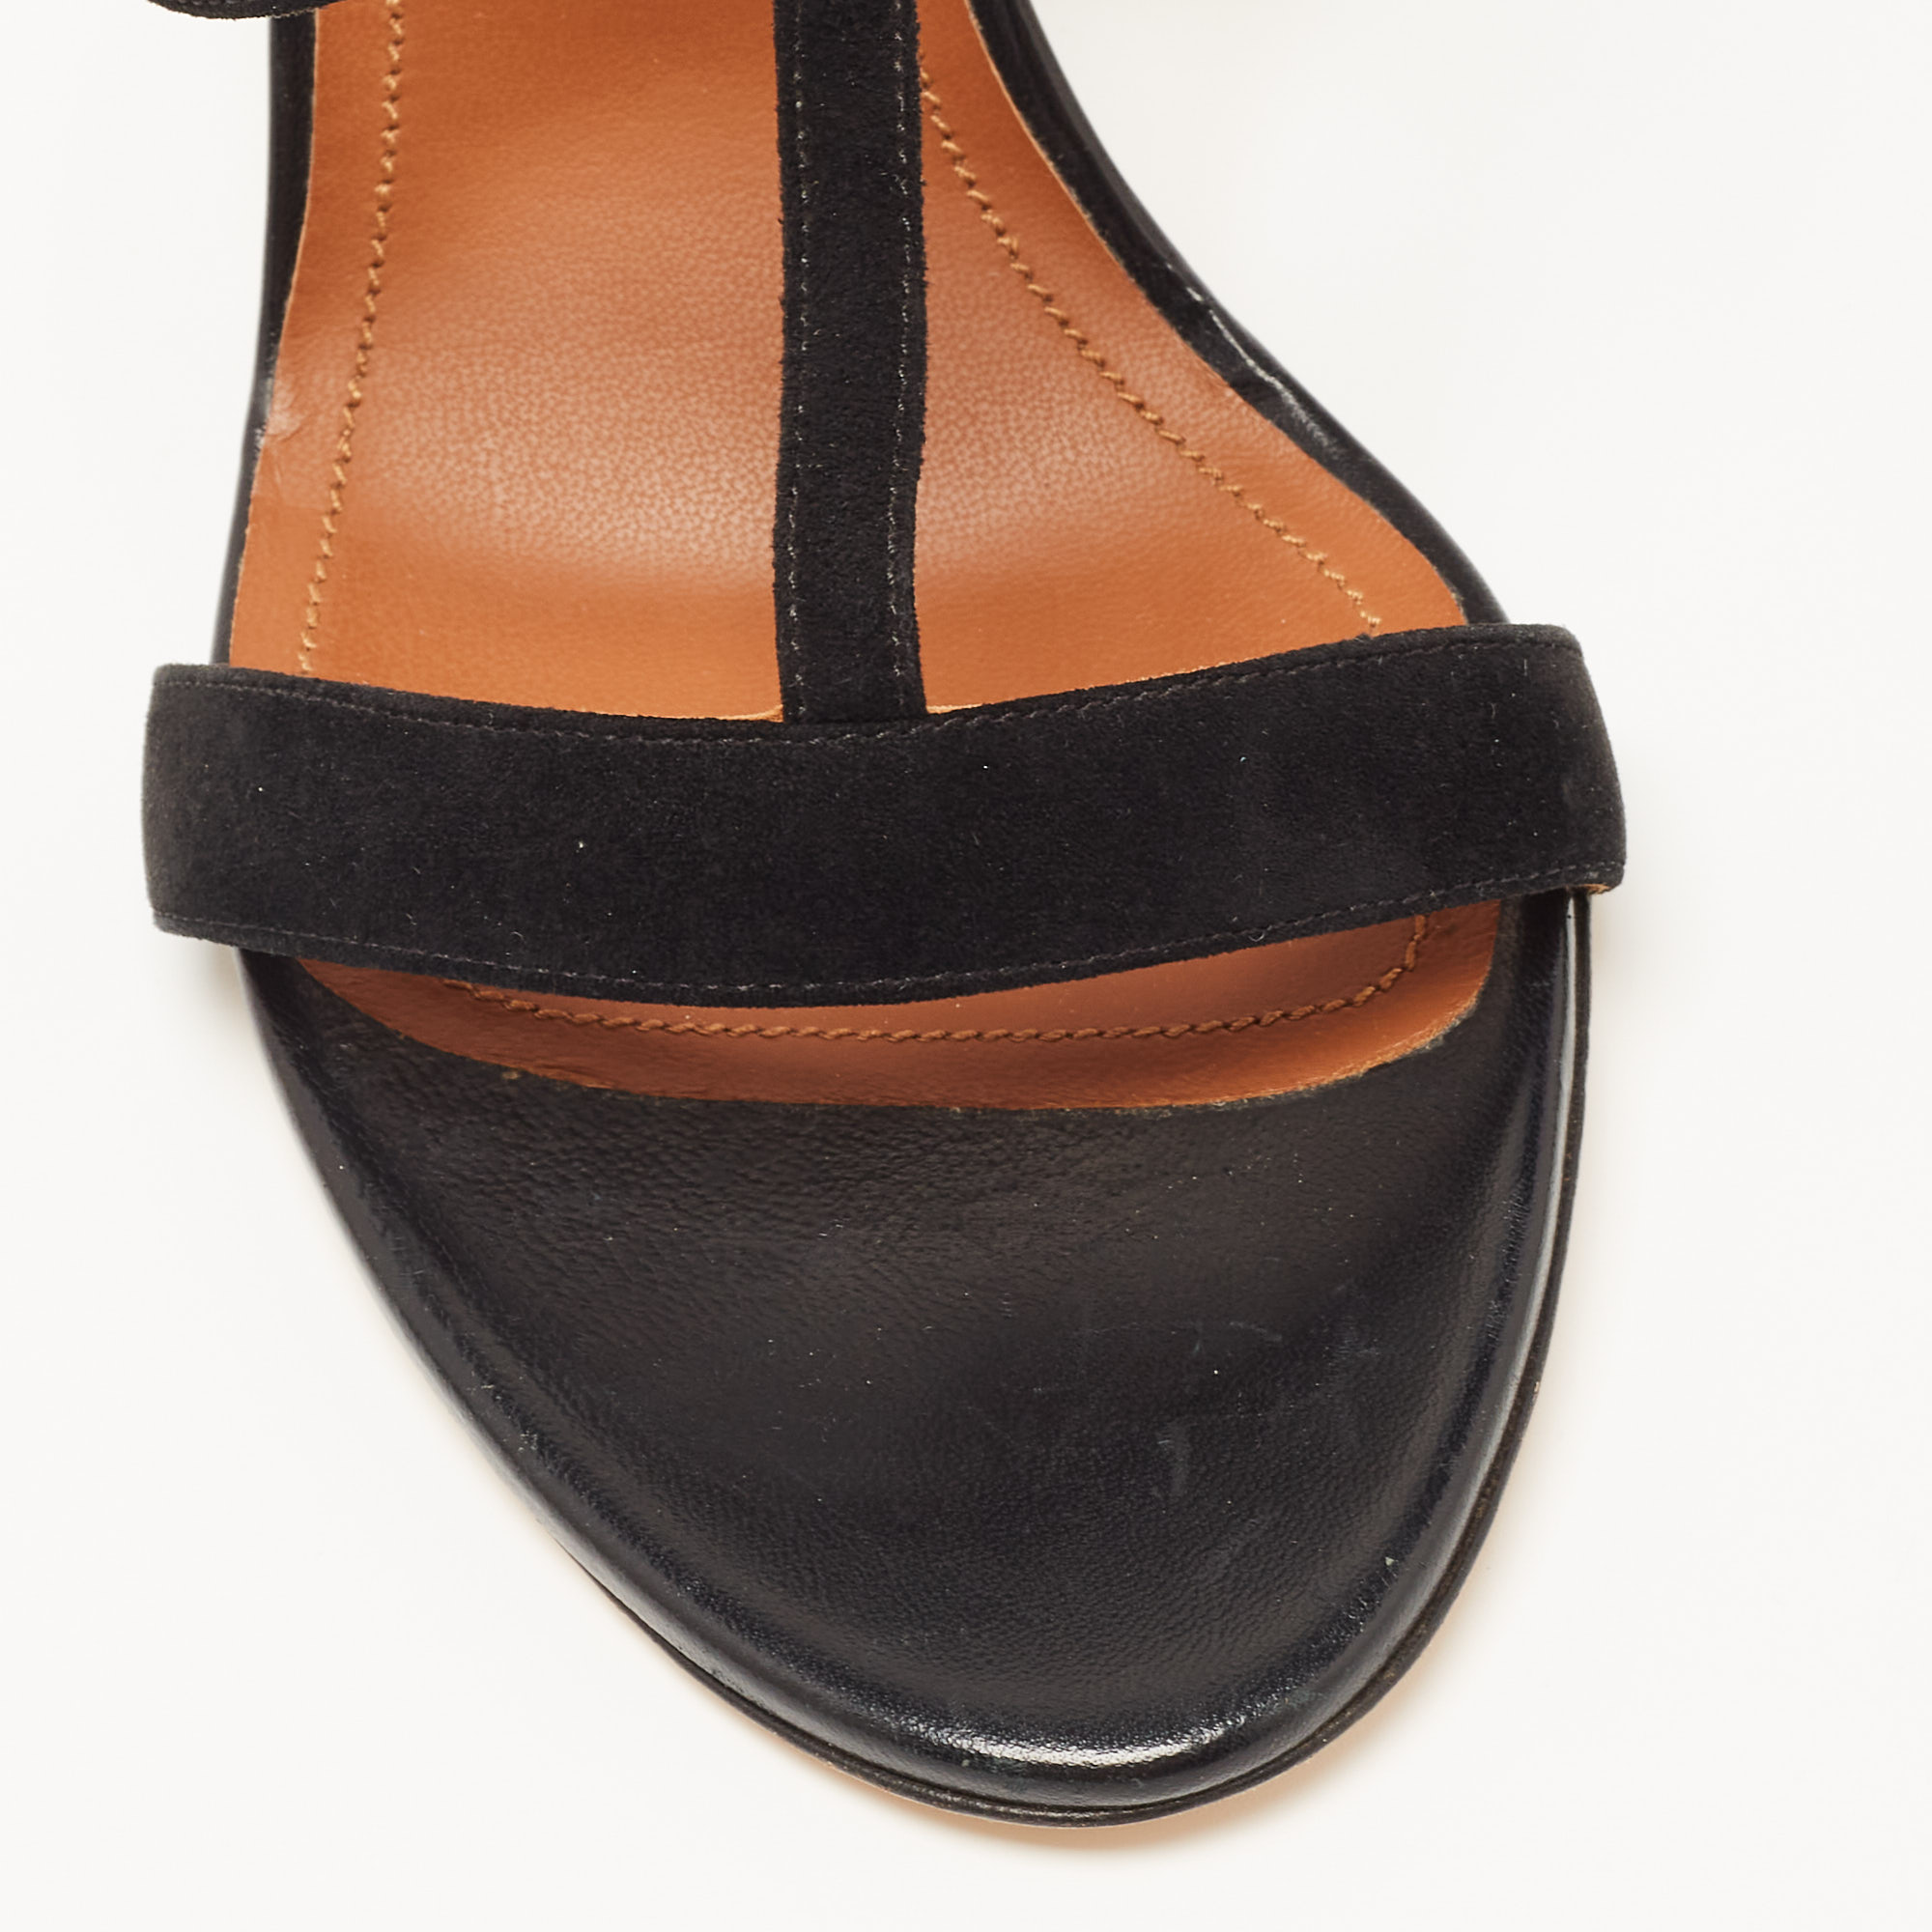 Malone Souliers Black Suede Floral Embellished Ankle Strap Sandals Size 41